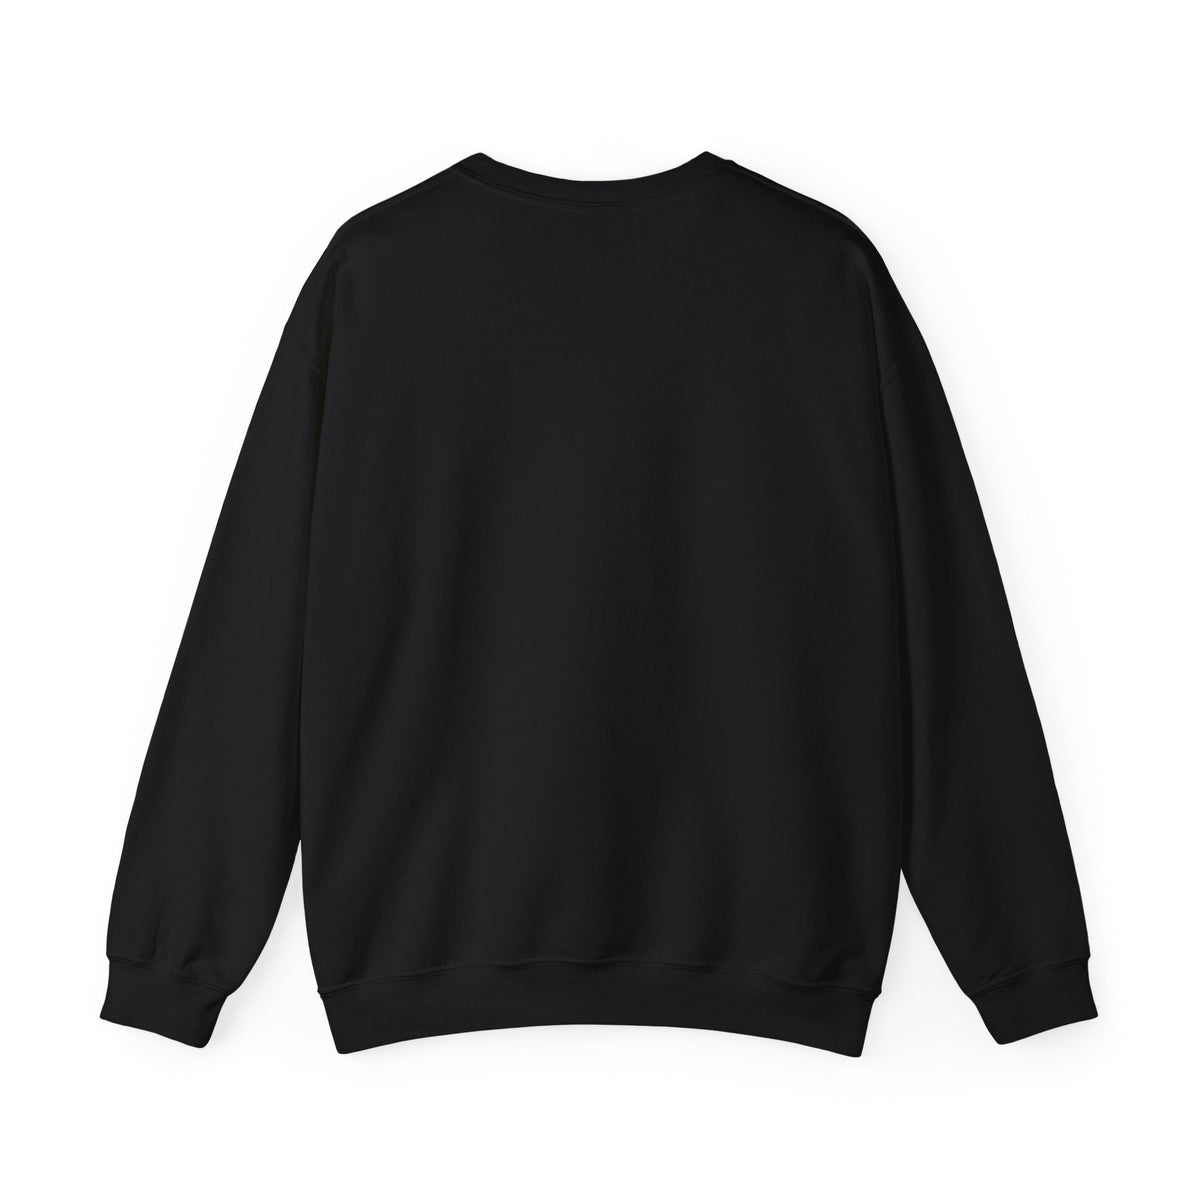 Reputation Sweatshirt | Rep. | Swiftie Sweatshirts | Taylor Swift Merch Sweatshirt TheFringeCultureCollective